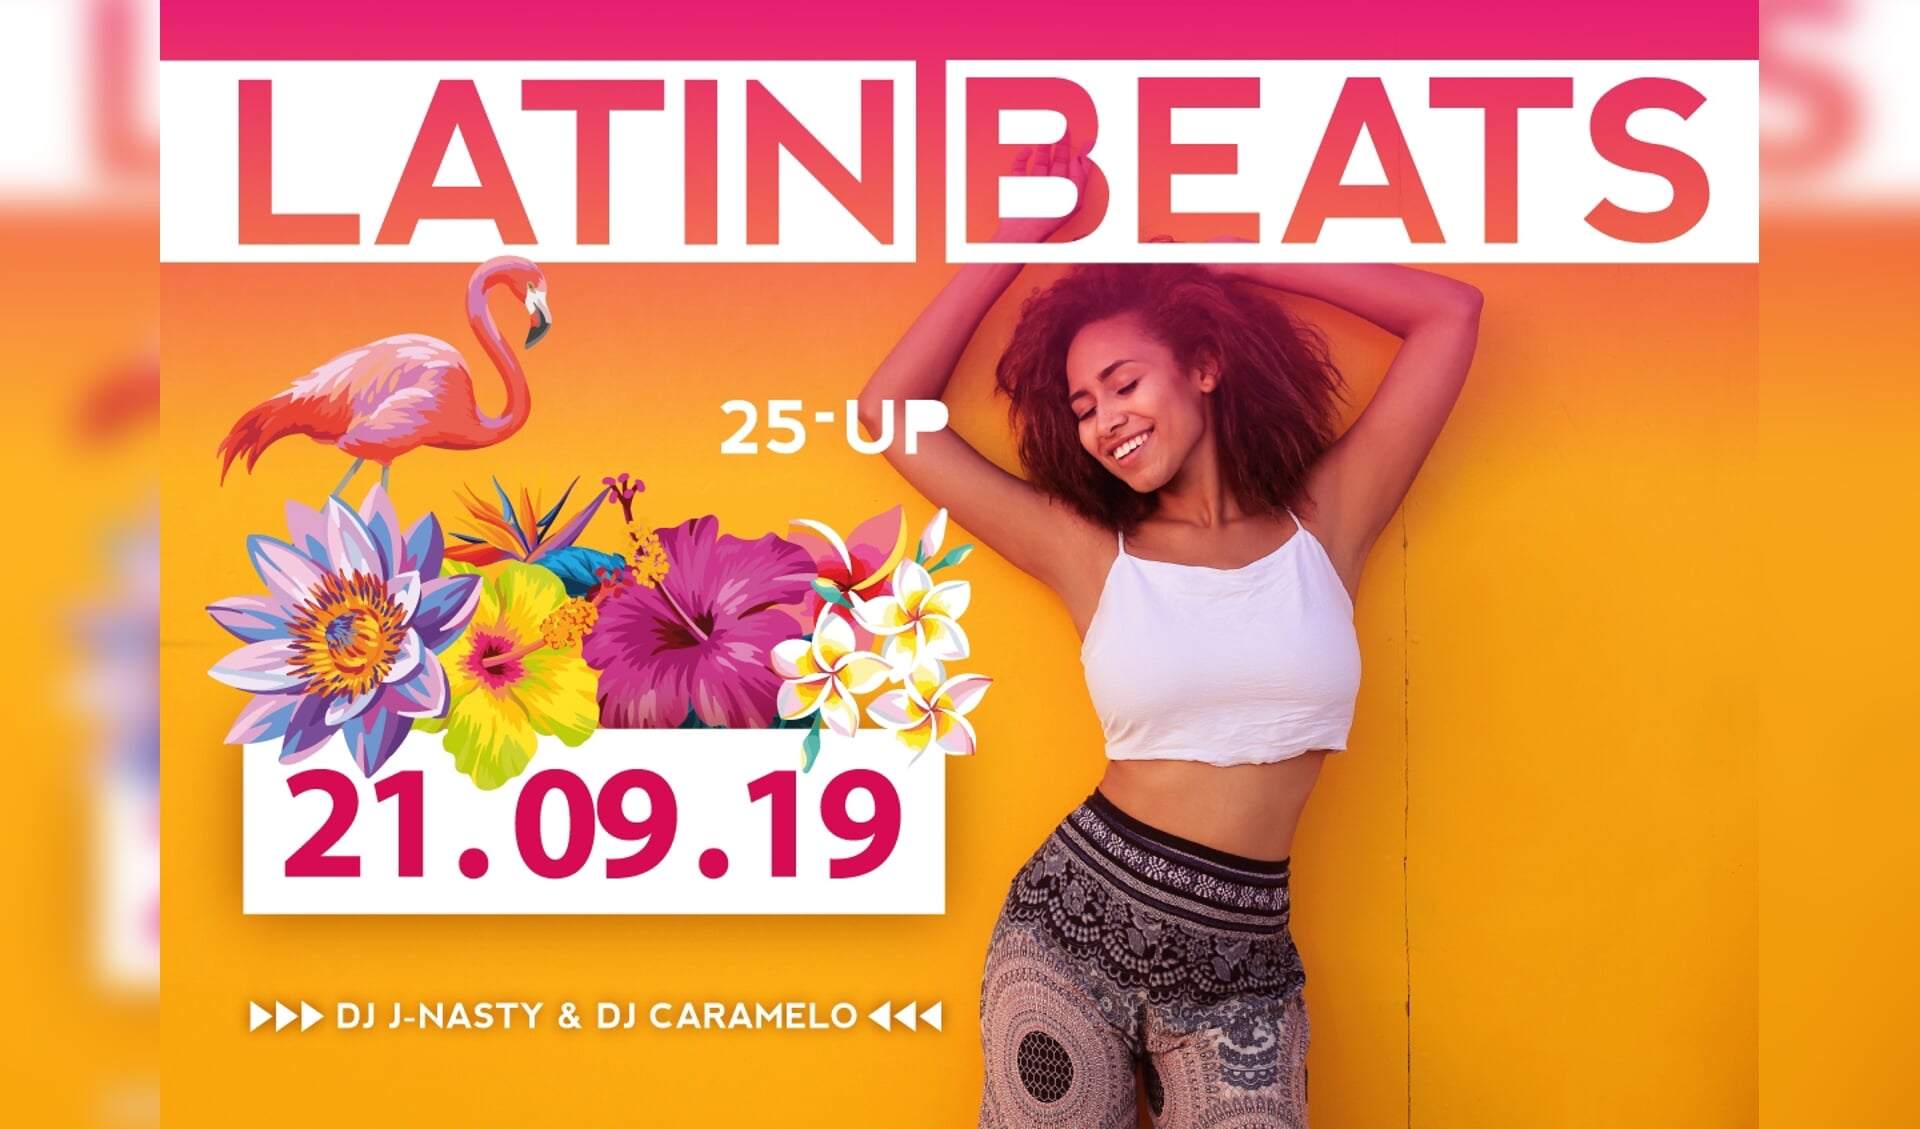 Latin Beats 25-up danceparty